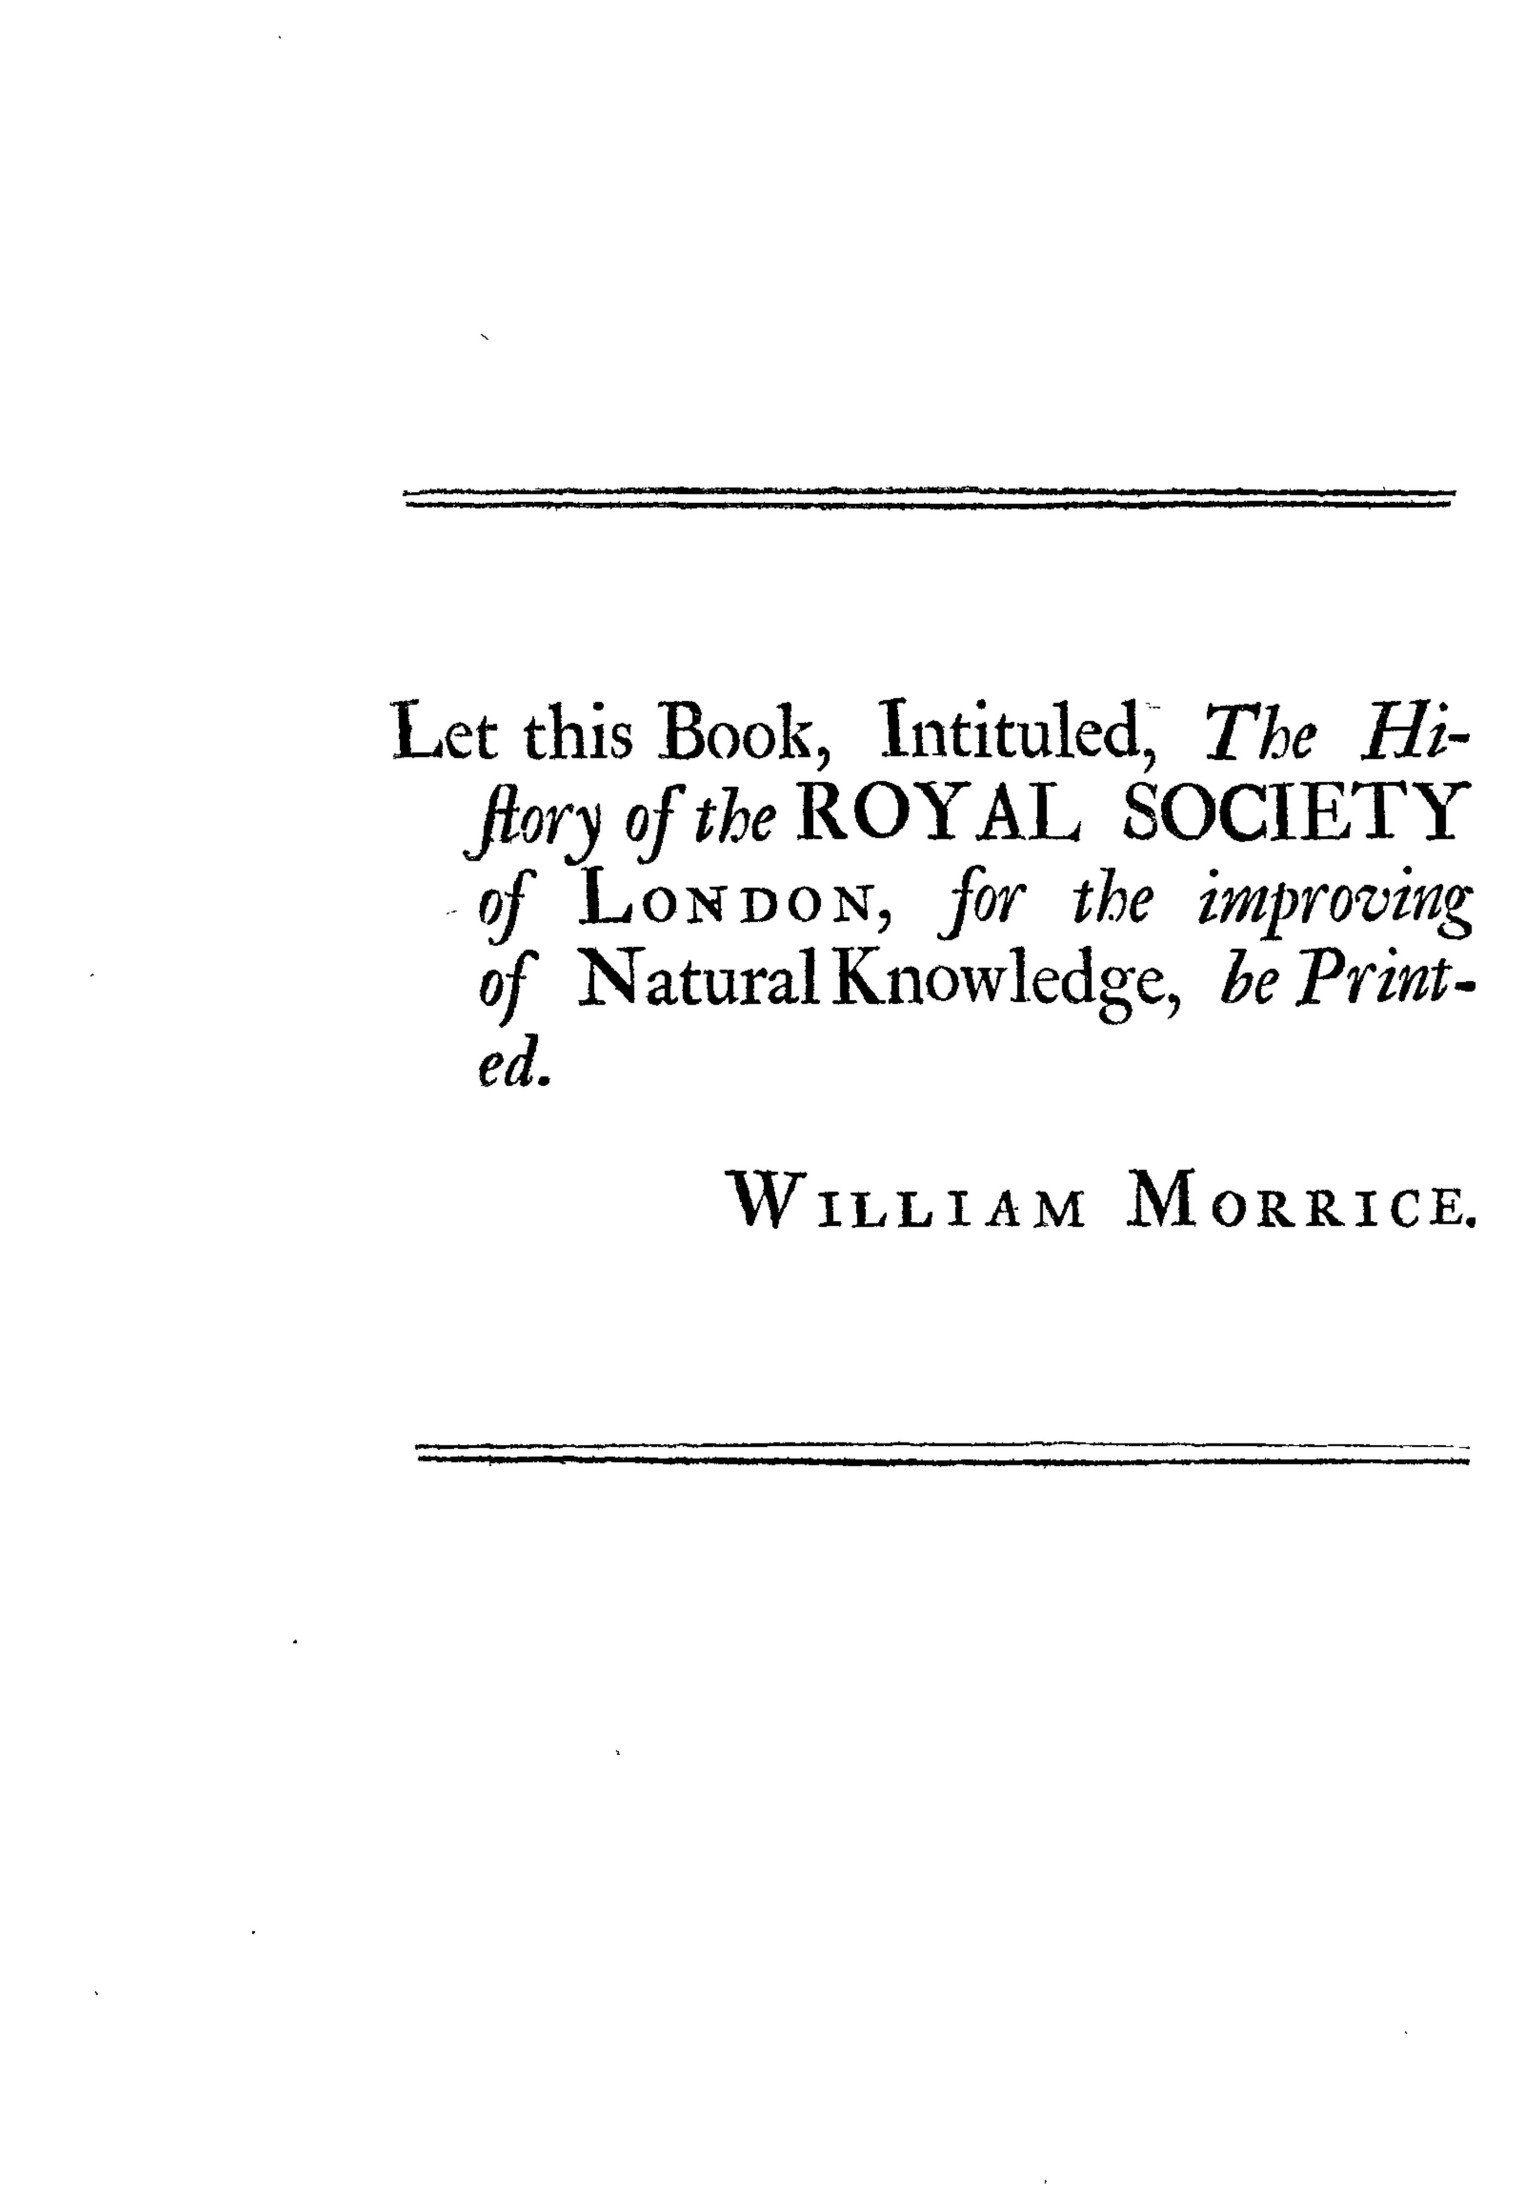 The History of the Royal Society of London